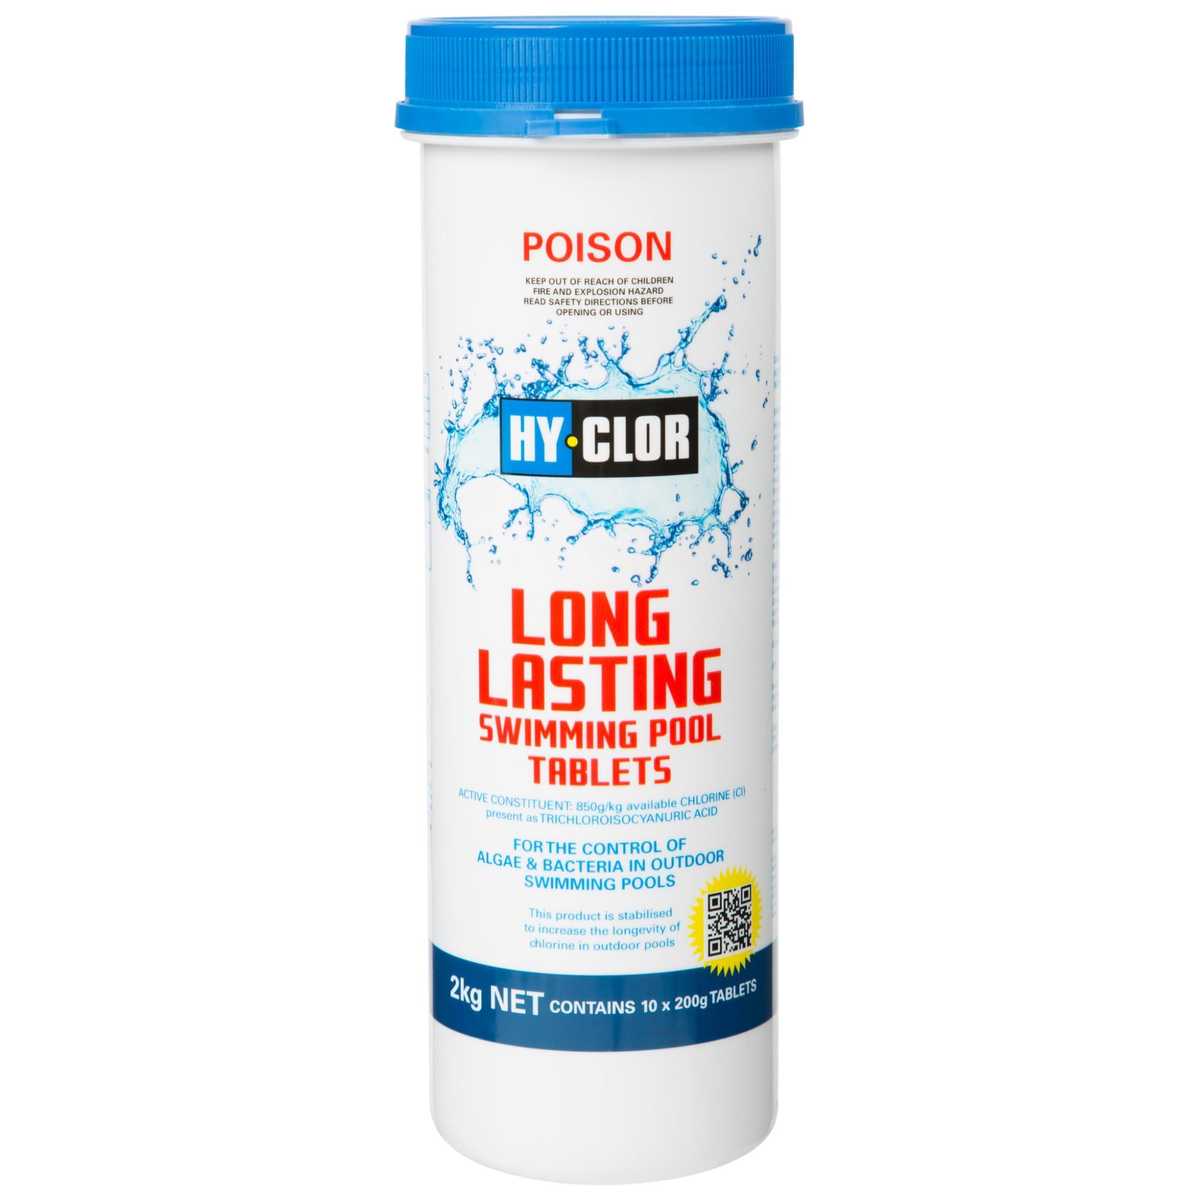 Long lasting chlorine